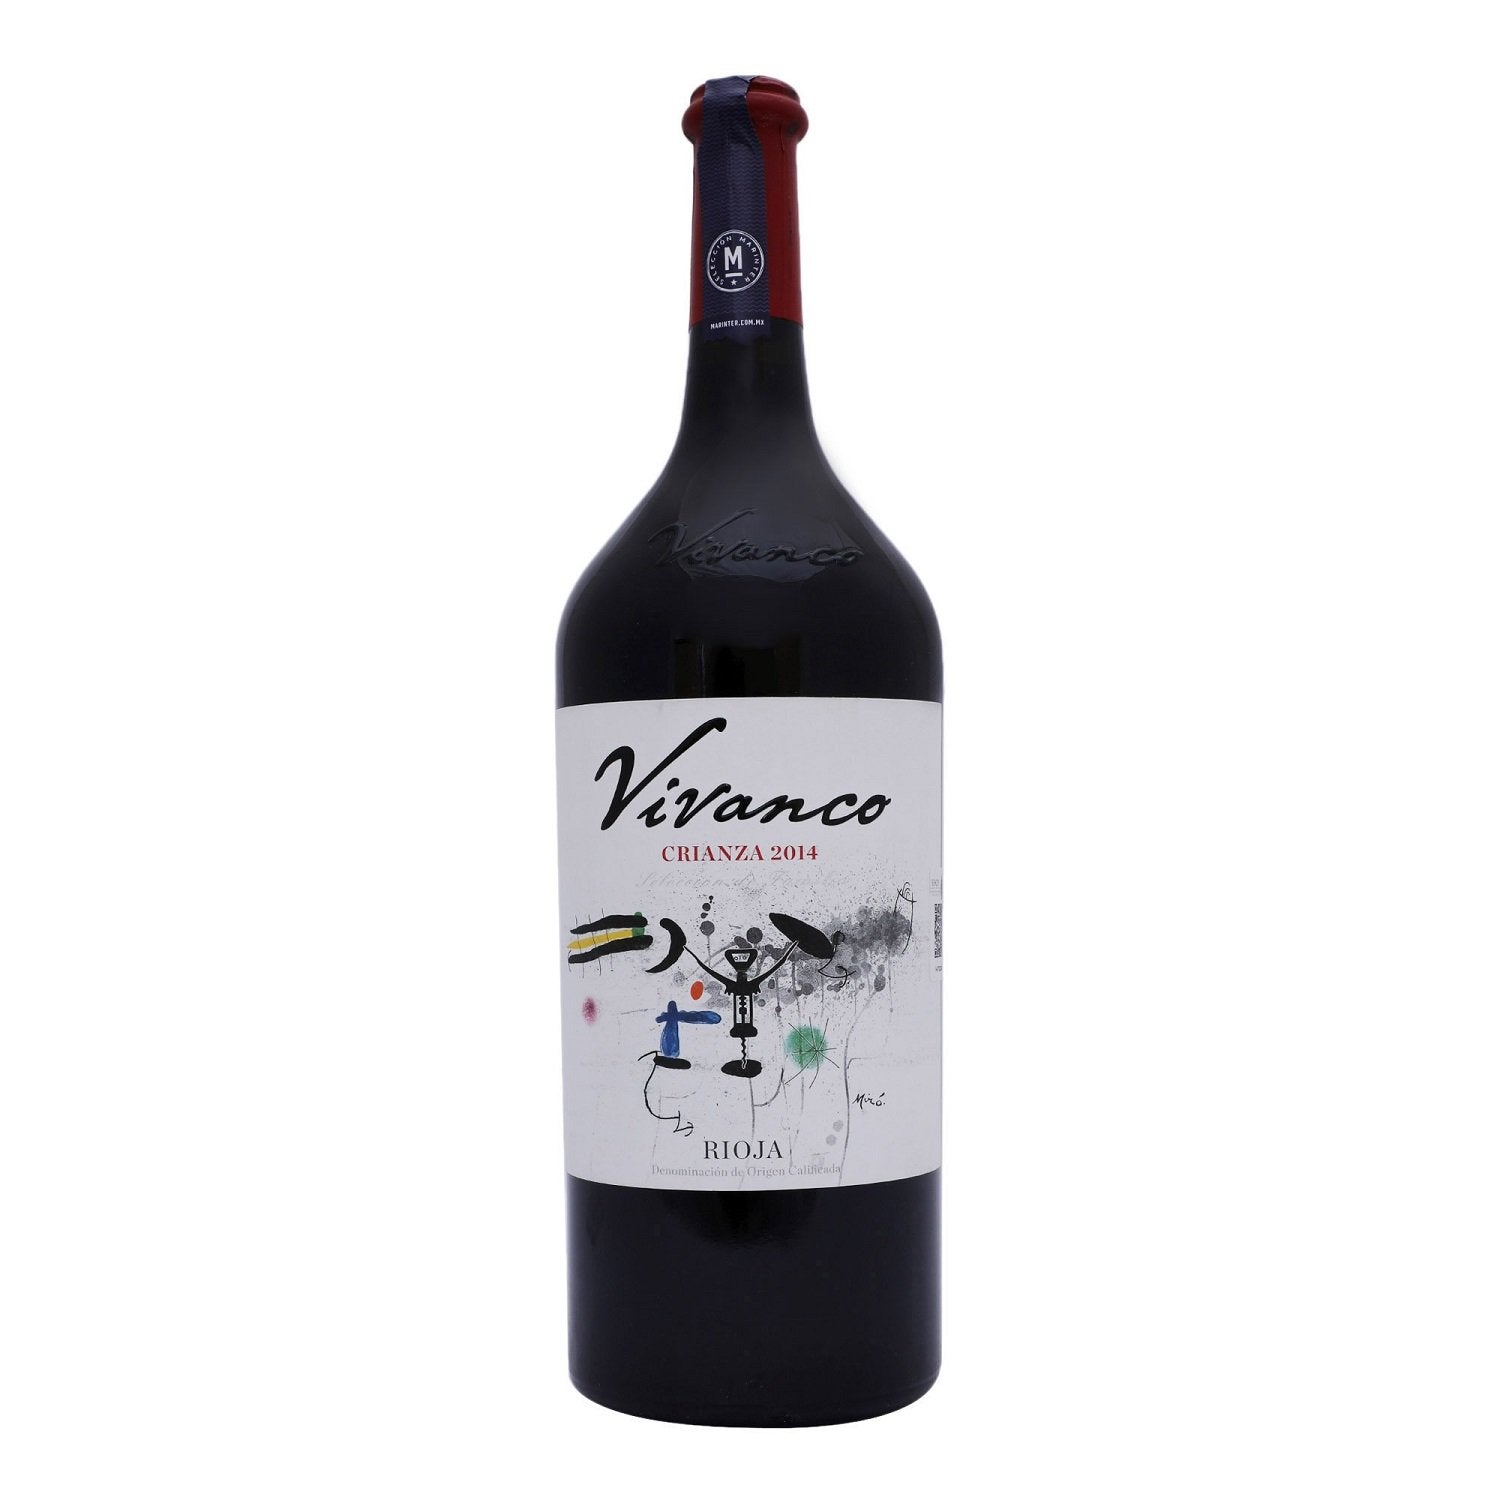 Vino Tinto - Vivanco Crianza - 1500 ml